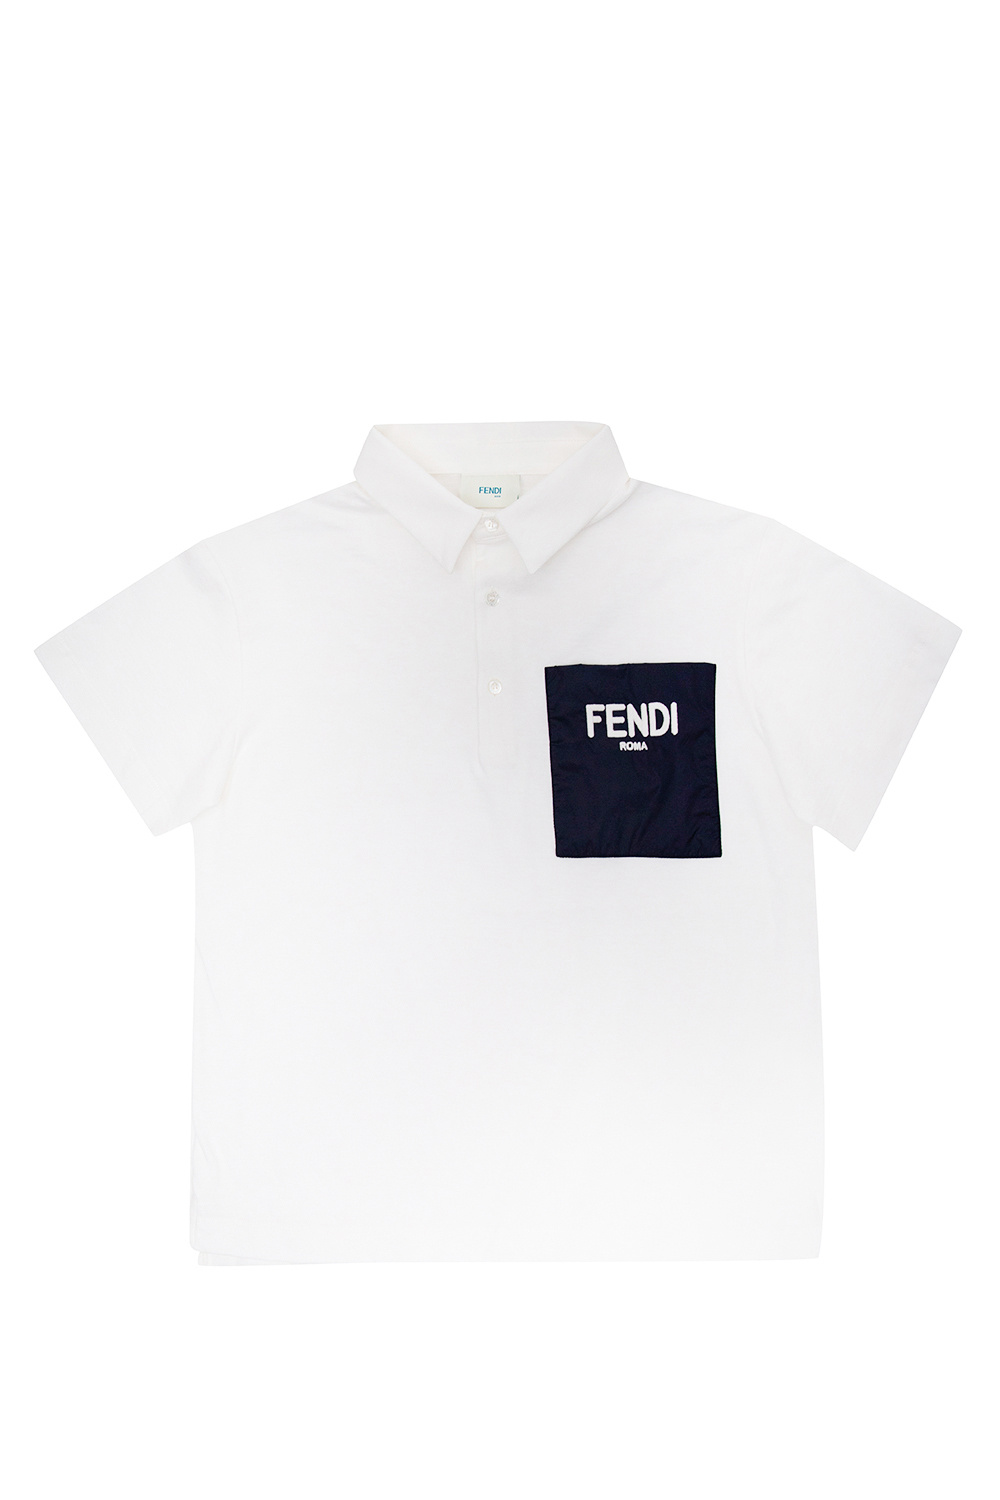 Fendi Kids cut polo shirt with logo